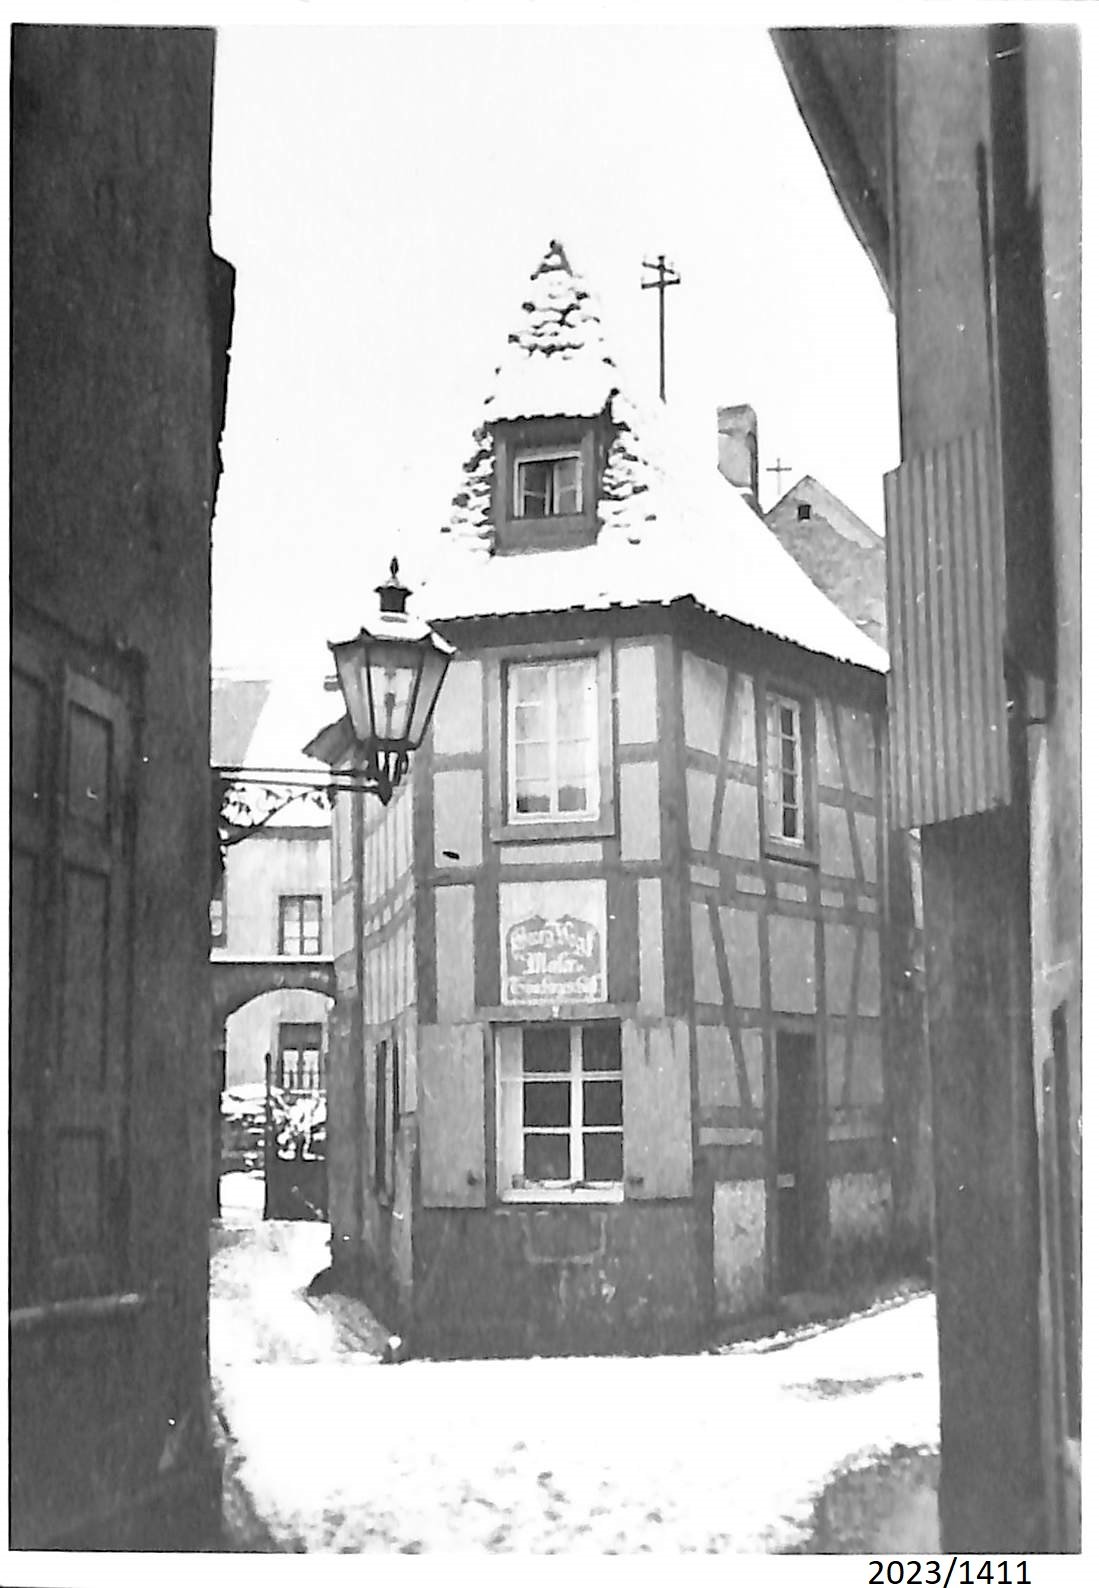 Bad Dürkheim, Anwesen Tüncher Vogt, 1930er Jahre (Stadtmuseum Bad Dürkheim im Kulturzentrum Haus Catoir CC BY-NC-SA)